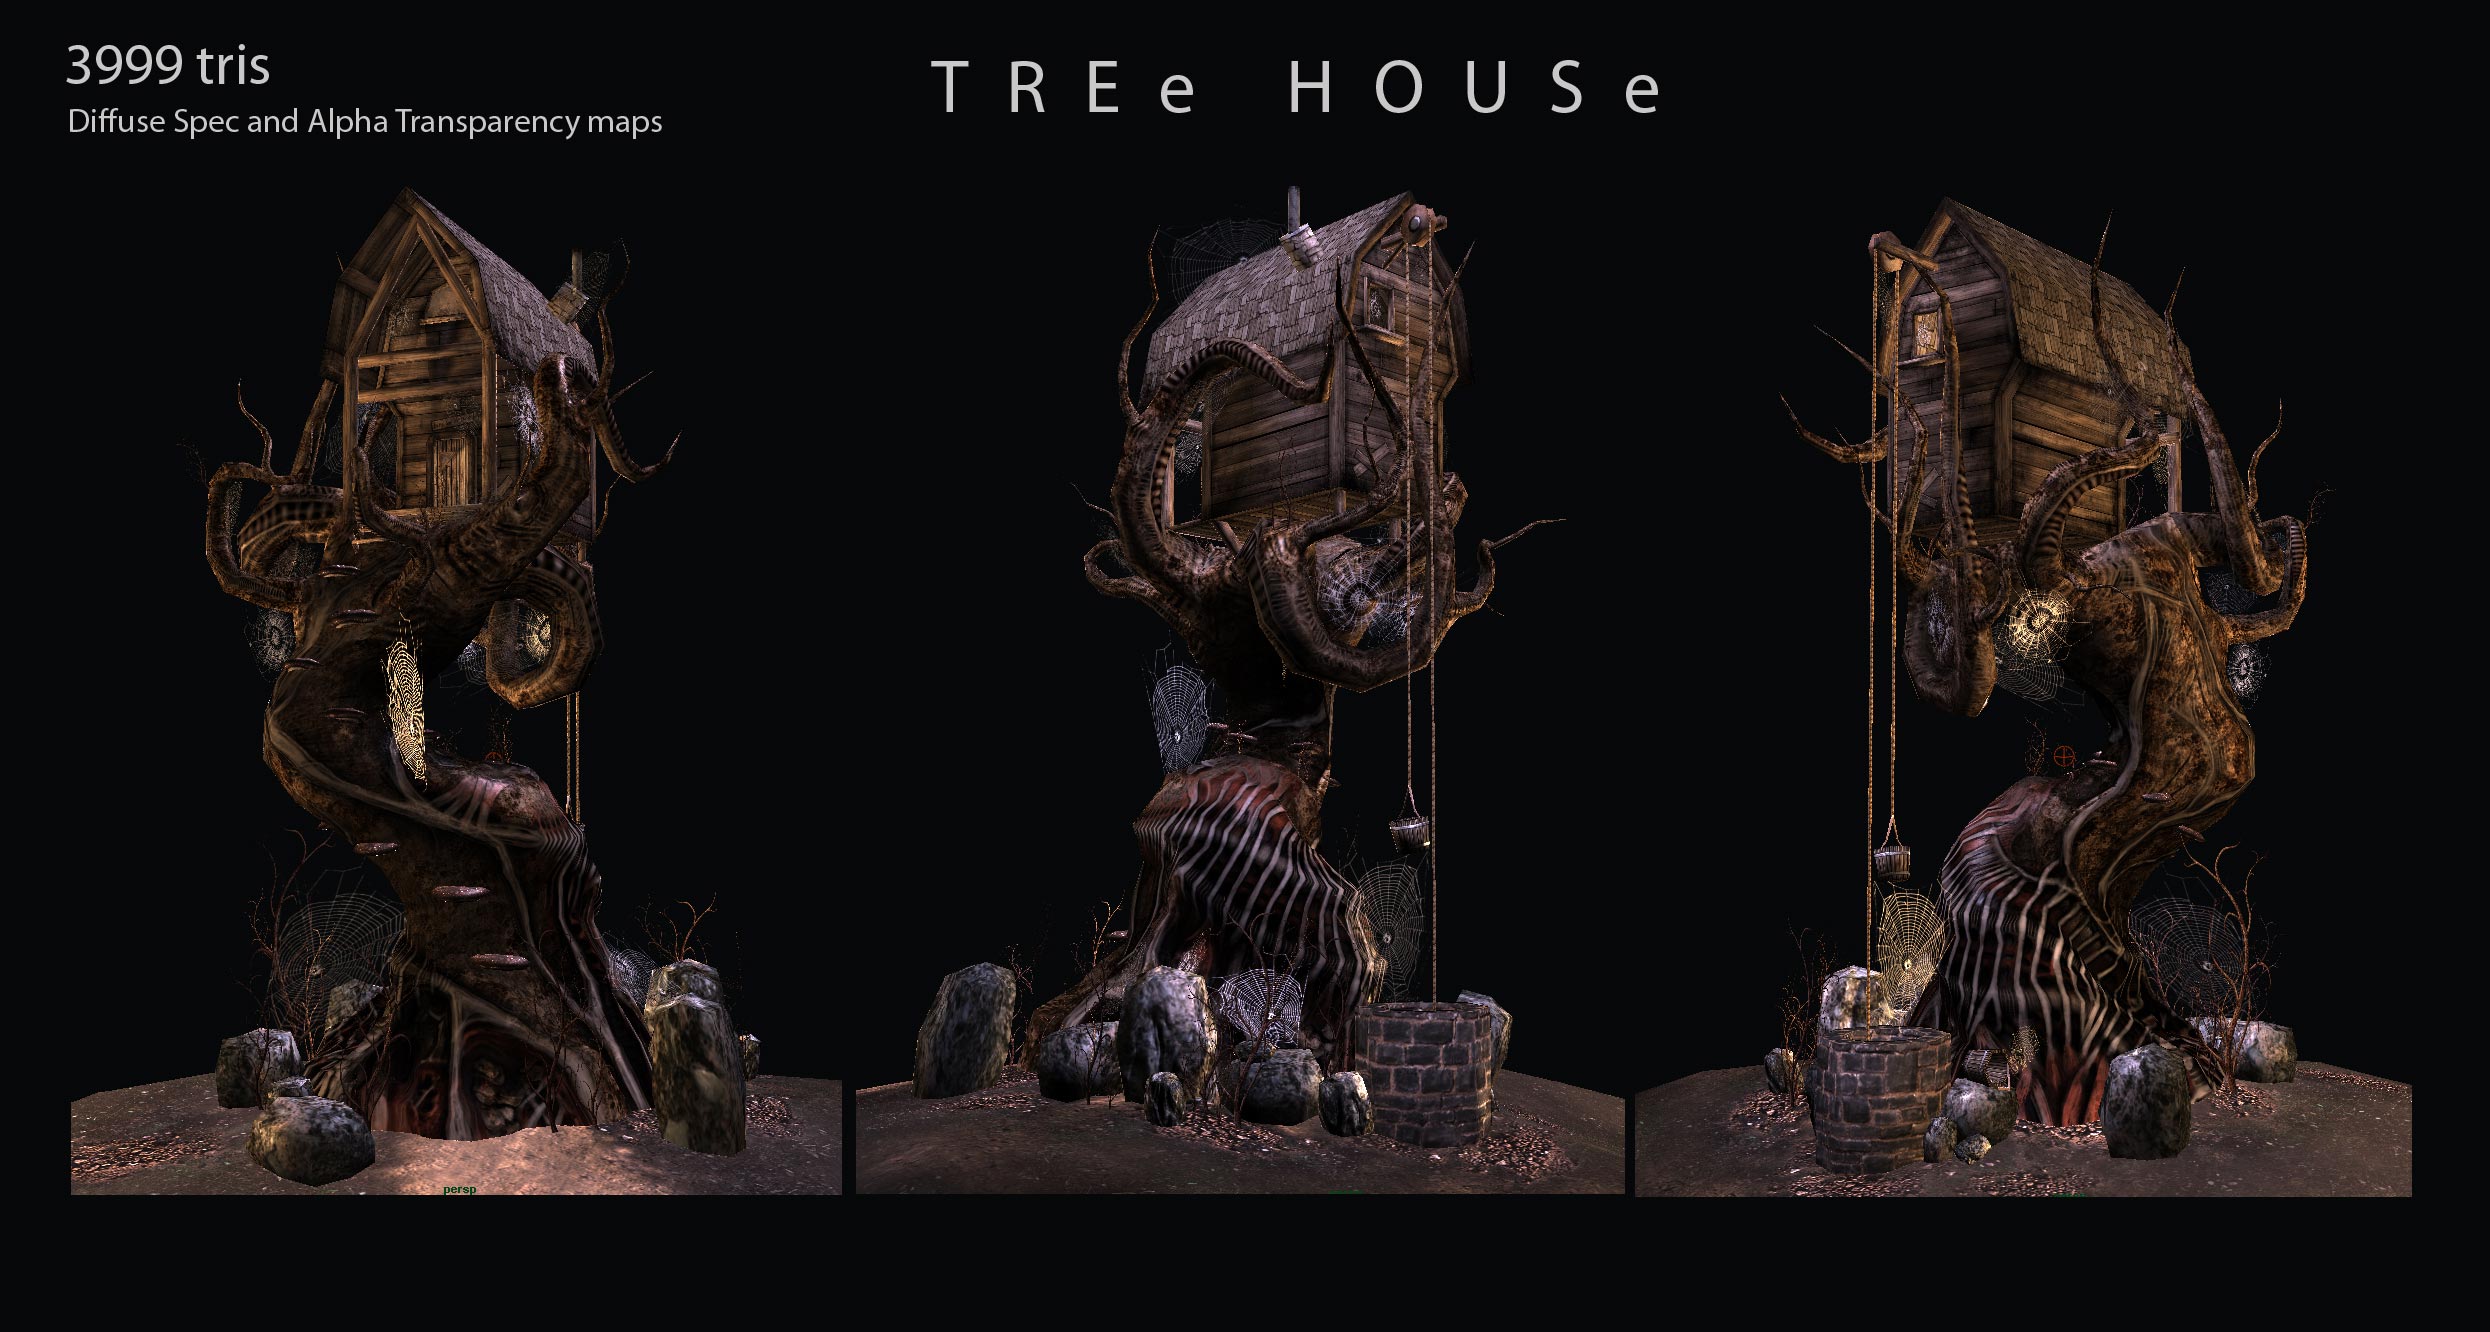 bbb_treehouse_final1.jpg